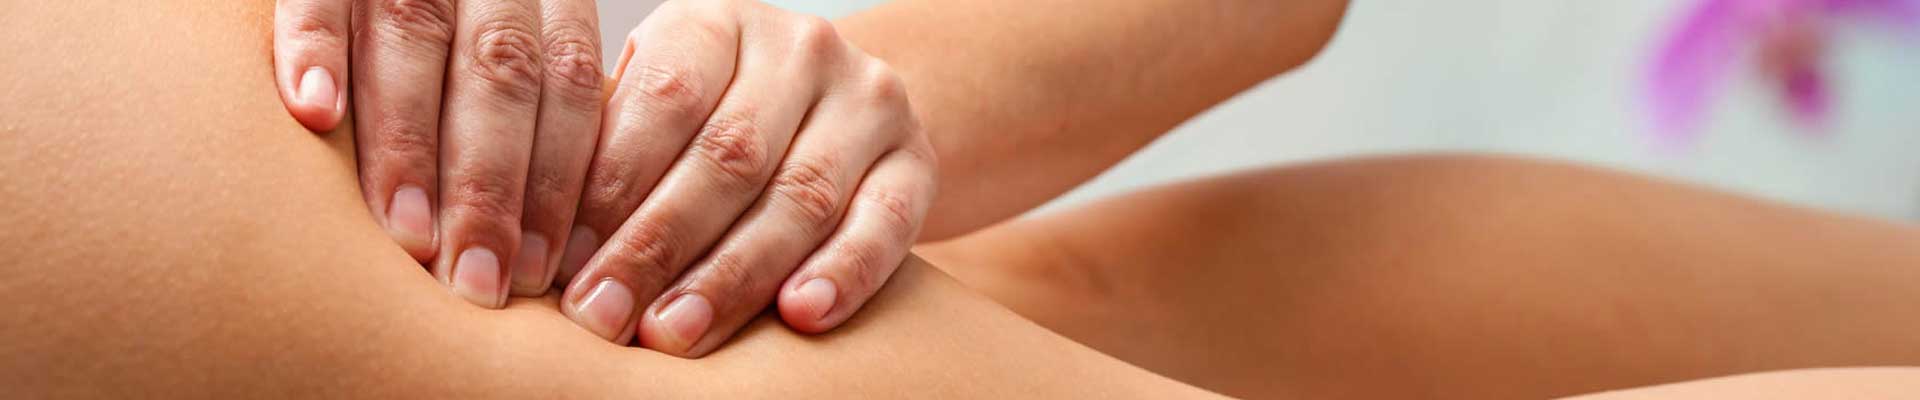 massage anti cellulite montigny les metz 57 moselle